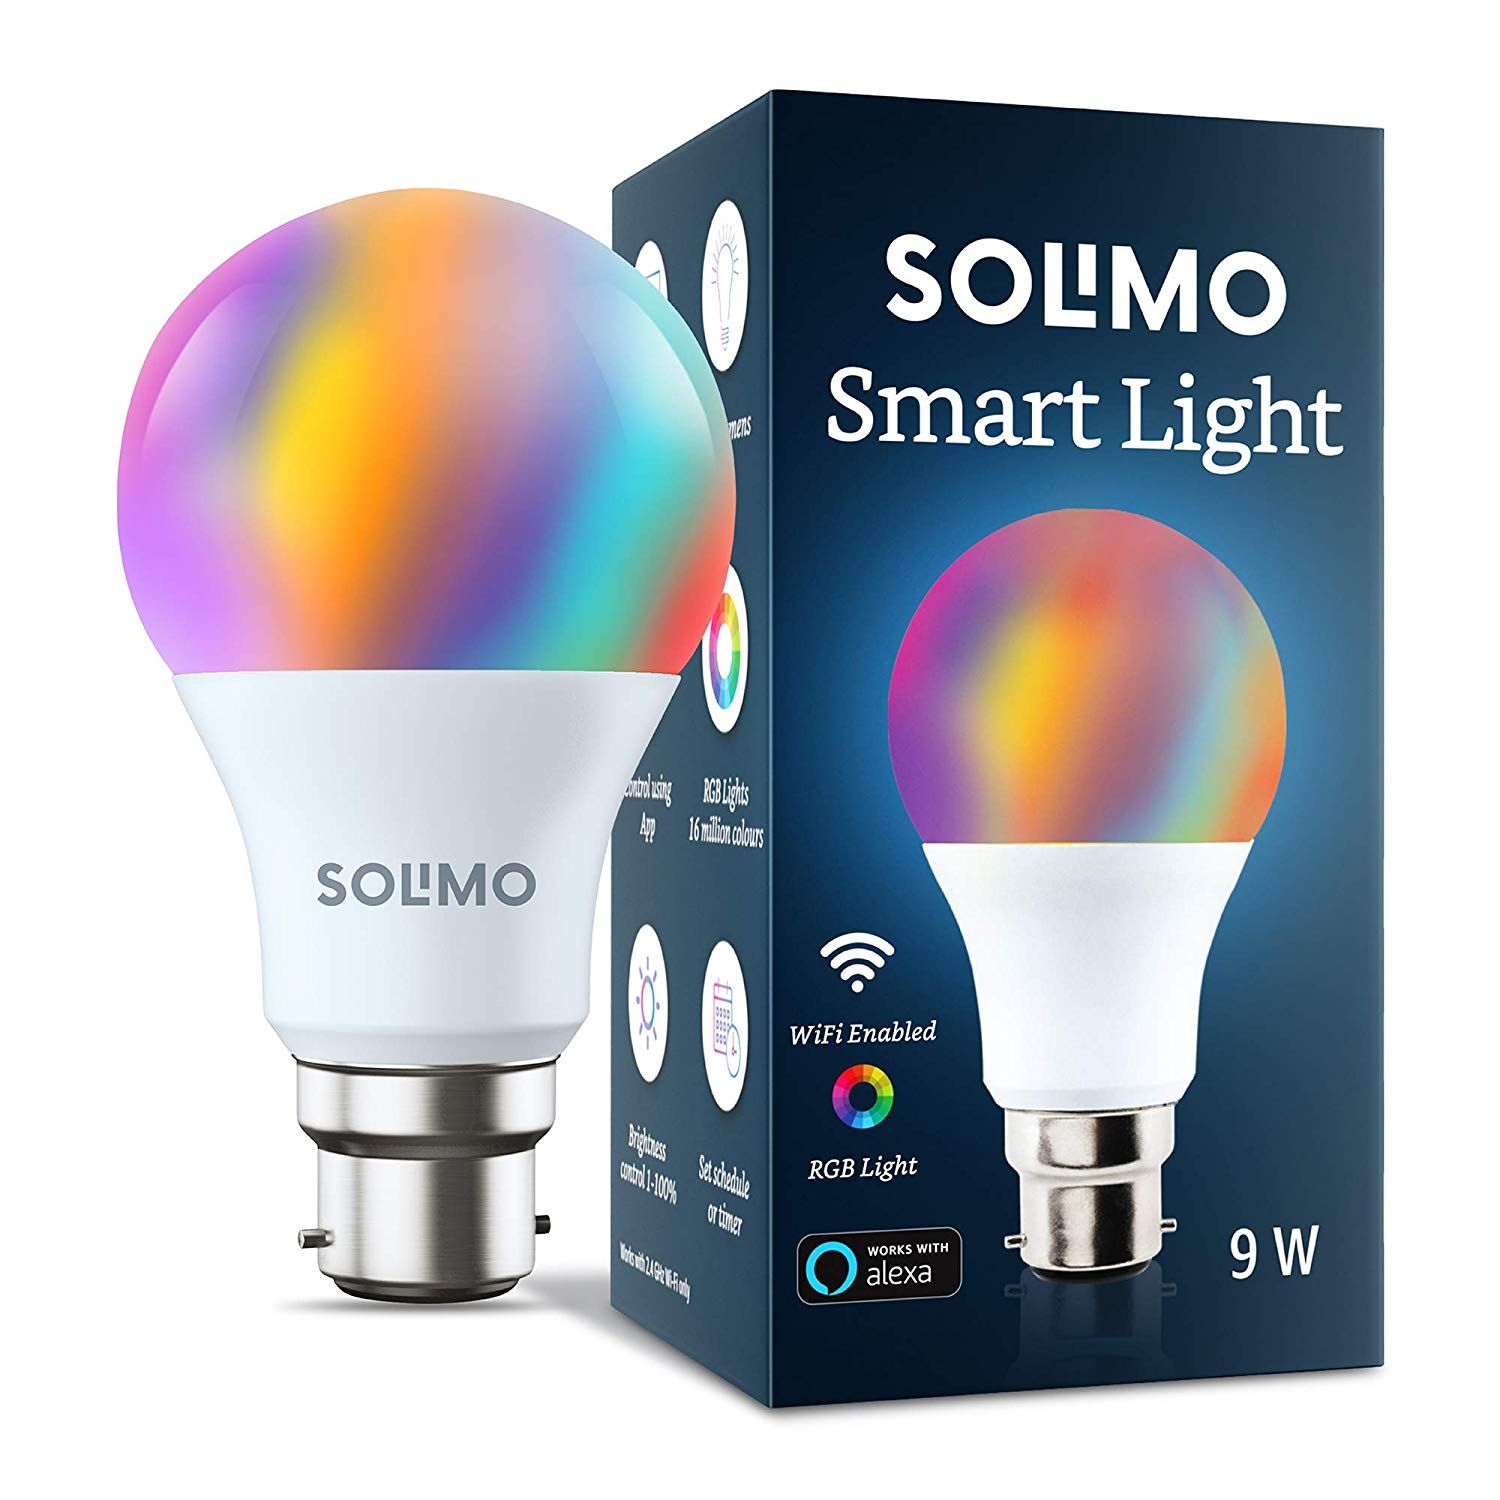 Amazon Brand - Solimo Smart LED Light, 9W